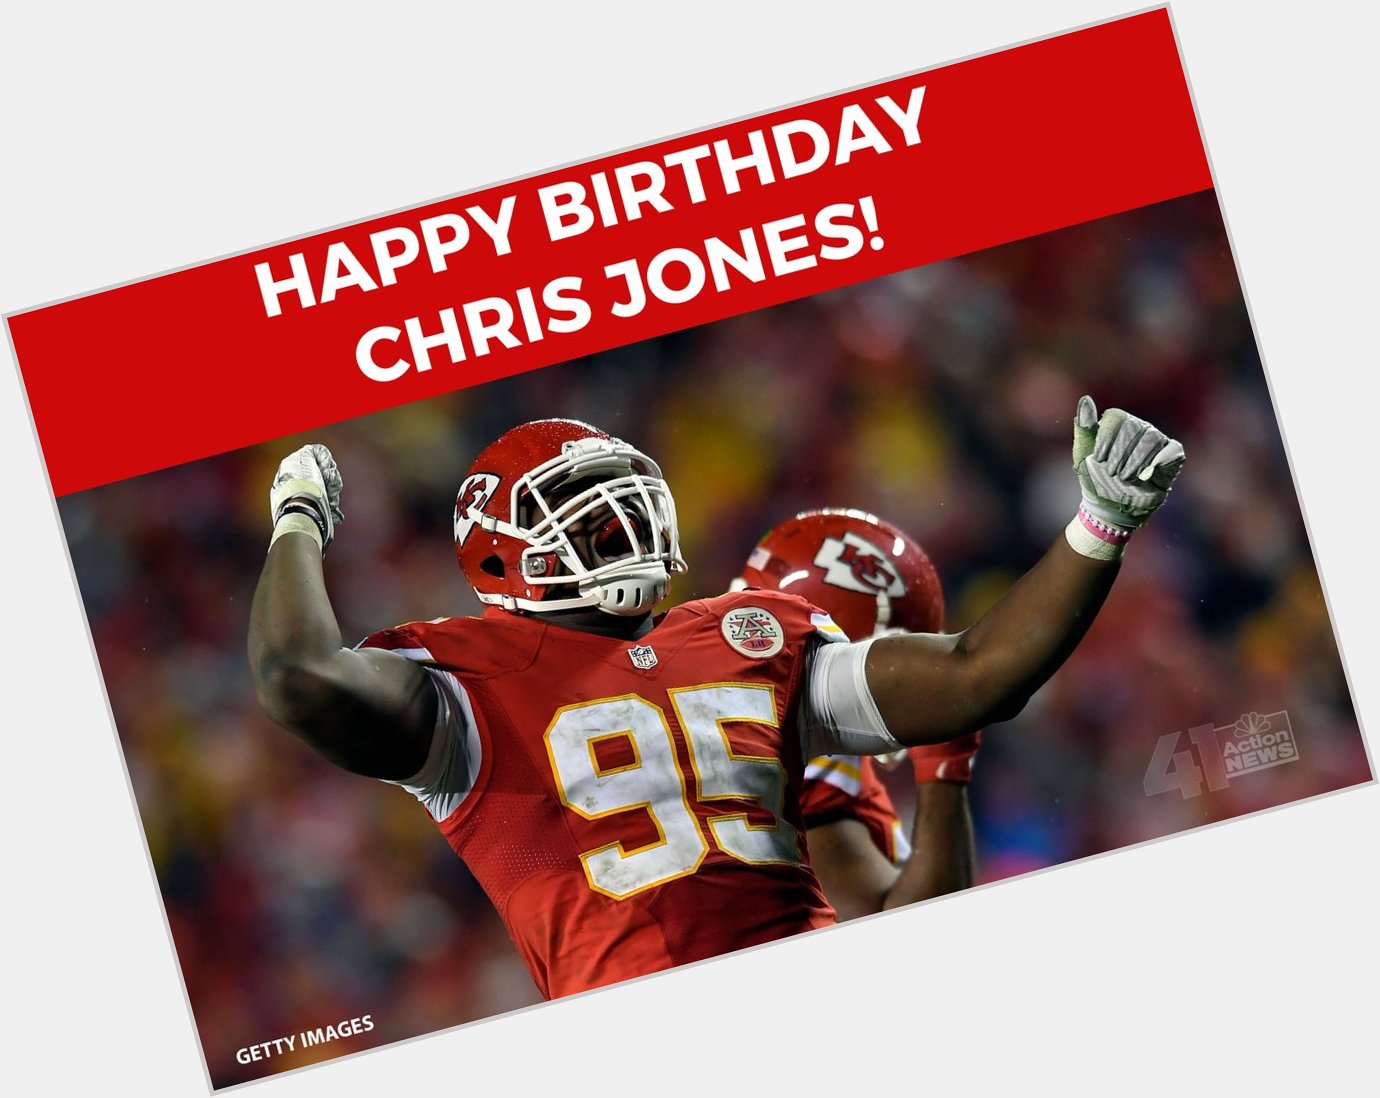 HAPPY BIRTHDAY to player Chris Jones! 